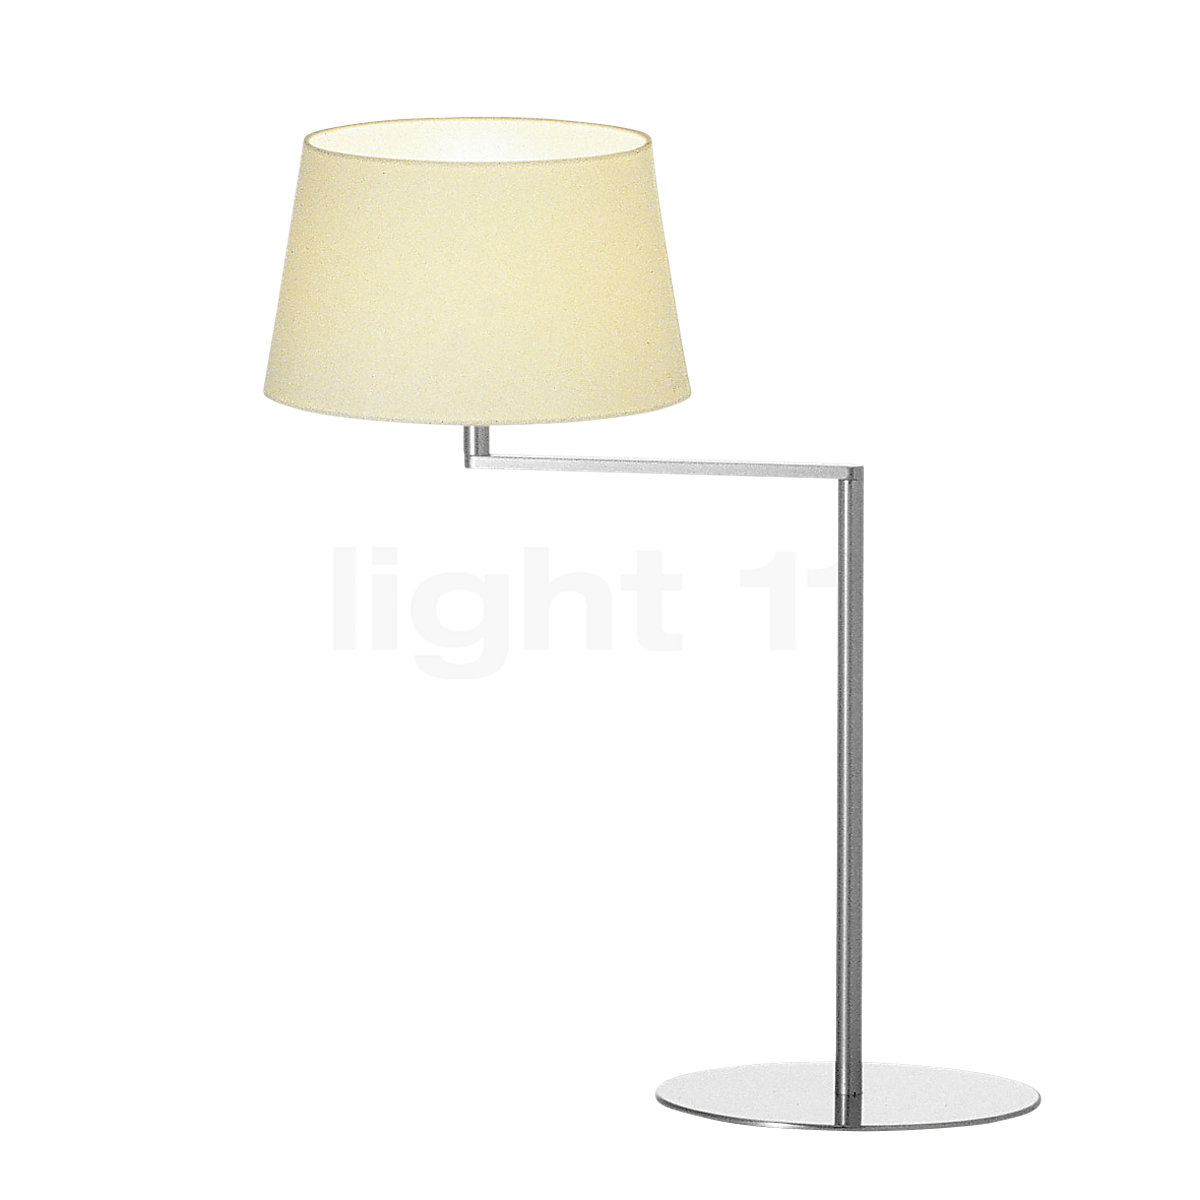 Cole Americana Table Lamp At Light11 Eu, Santa Table Lamp